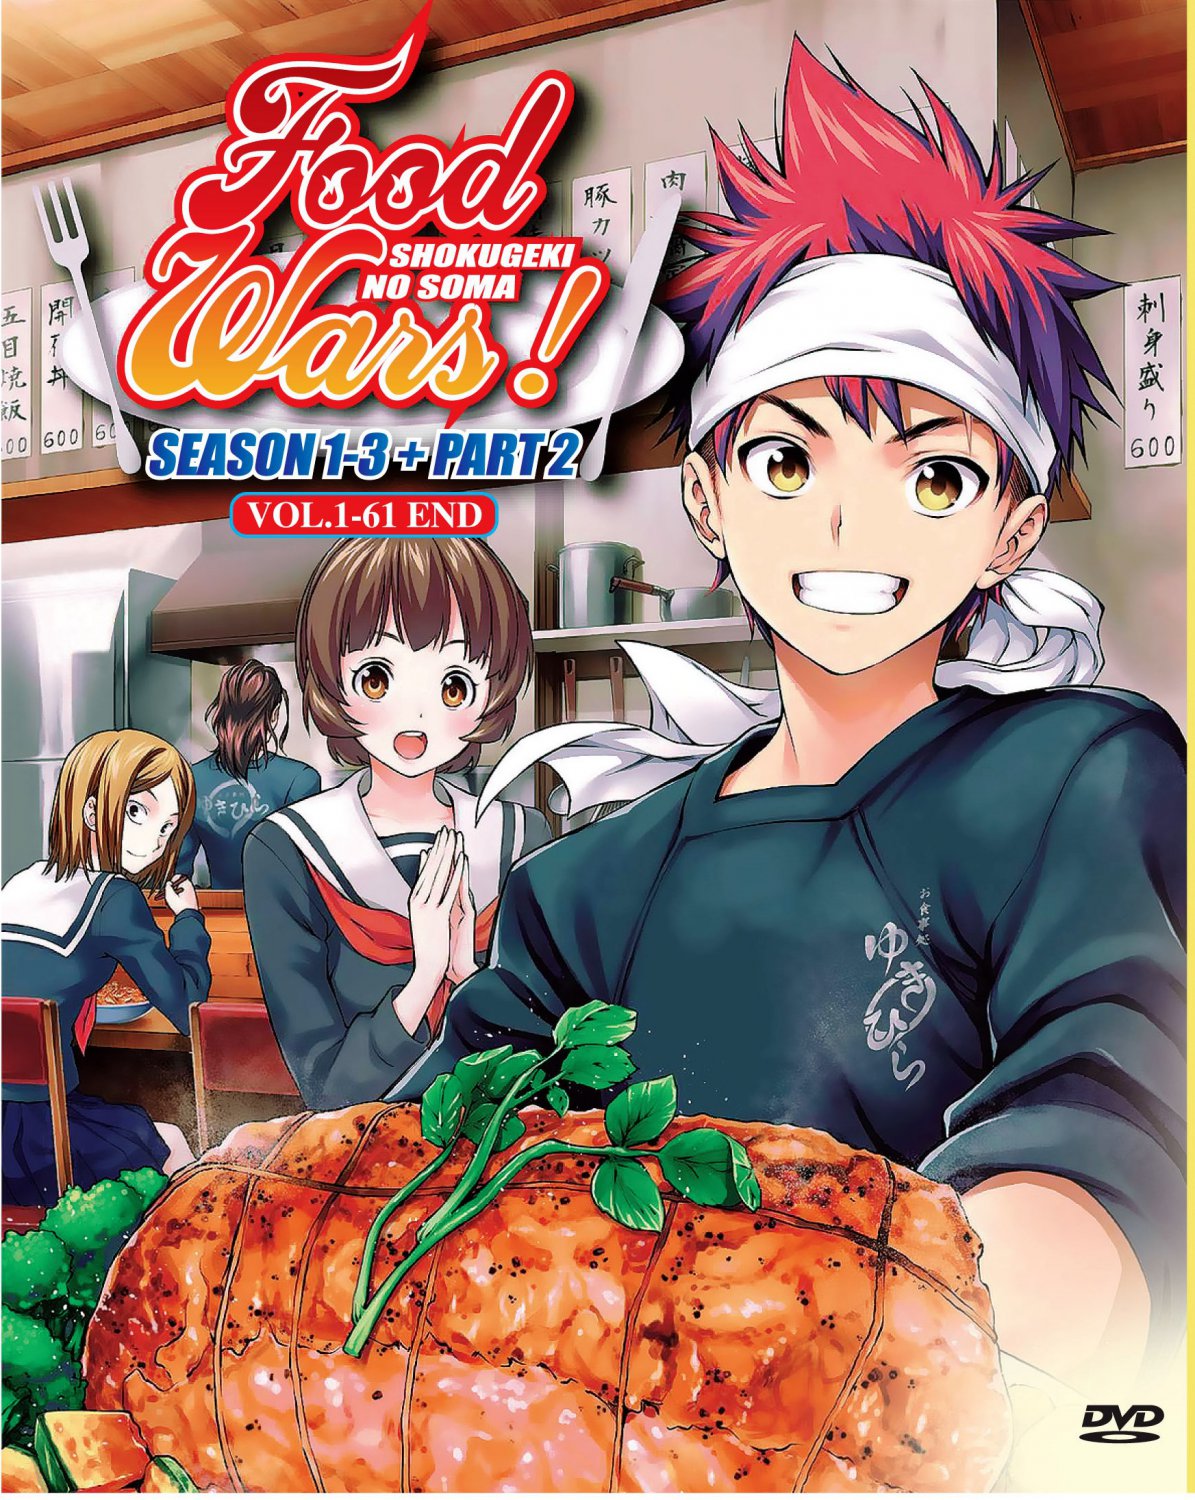 DVD Food Wars Shokugeki No Soma Sea 1-3 + Part 2 Japanese Anime Eng Sub STO...